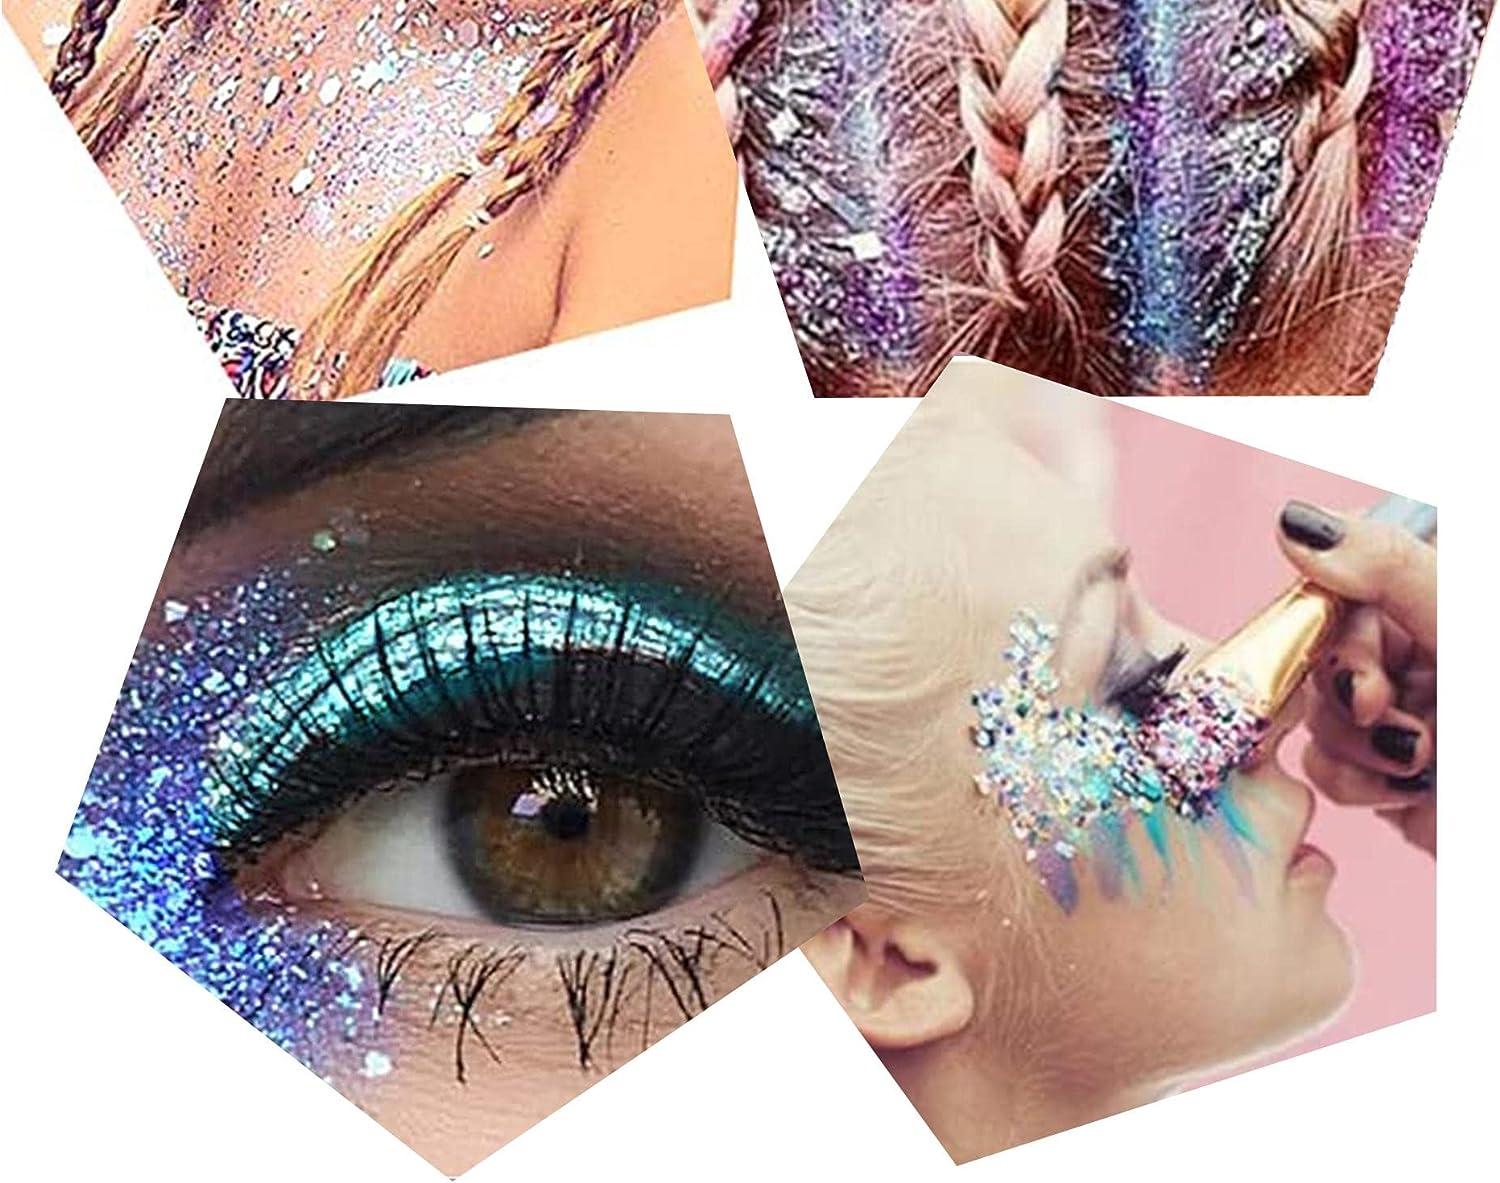 Body Glitter Gel, Face Glitter Mermaid Sequins Liquid Holographic